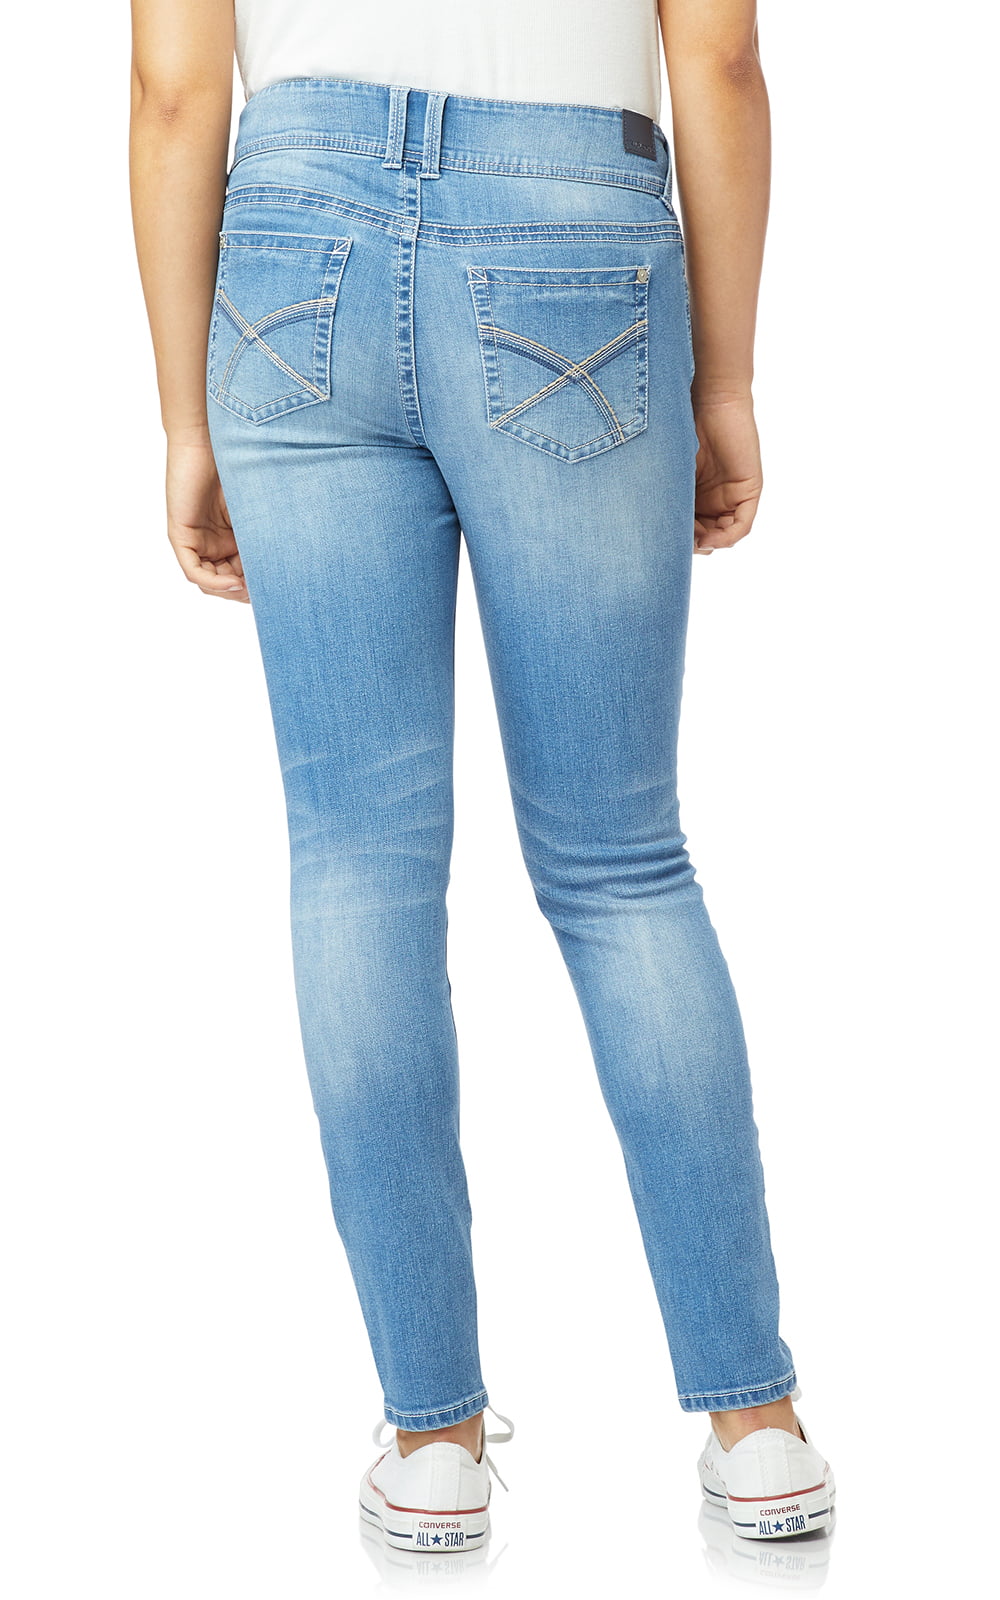 Super Stretch Denim Skinny Jeans Size: 7-16 WallFlower Girls’ Jeans 